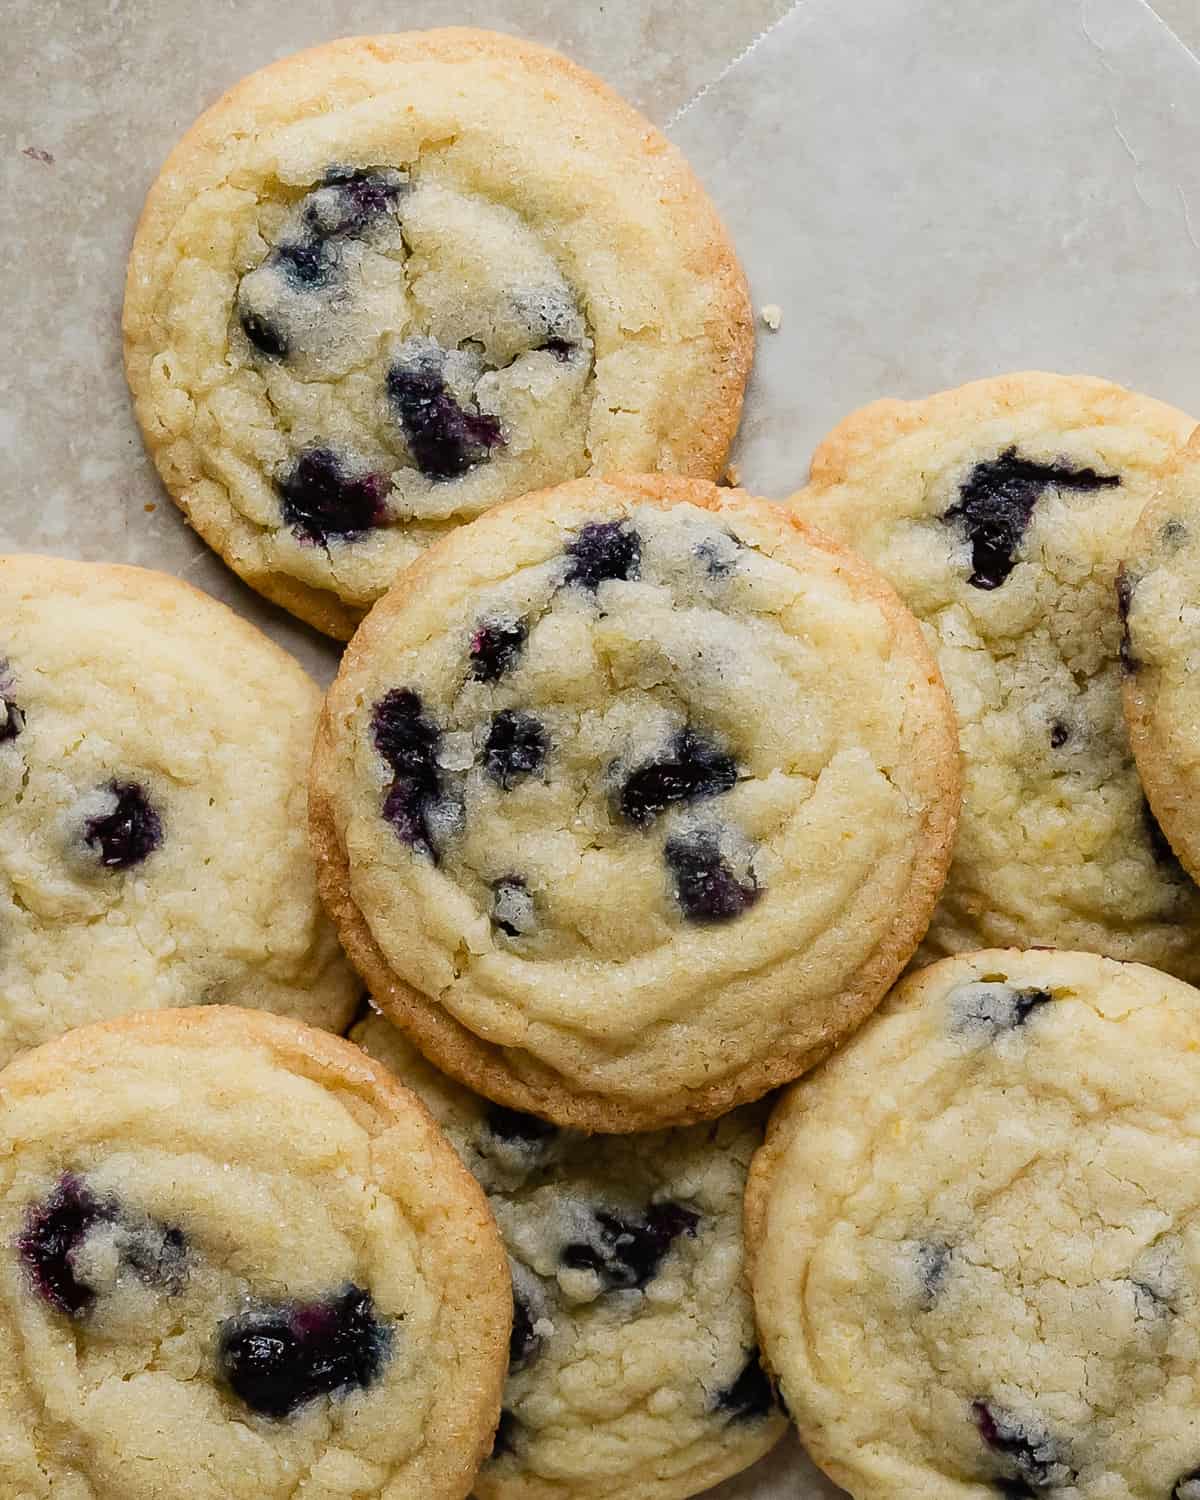 Lemon Blueberry Cookies